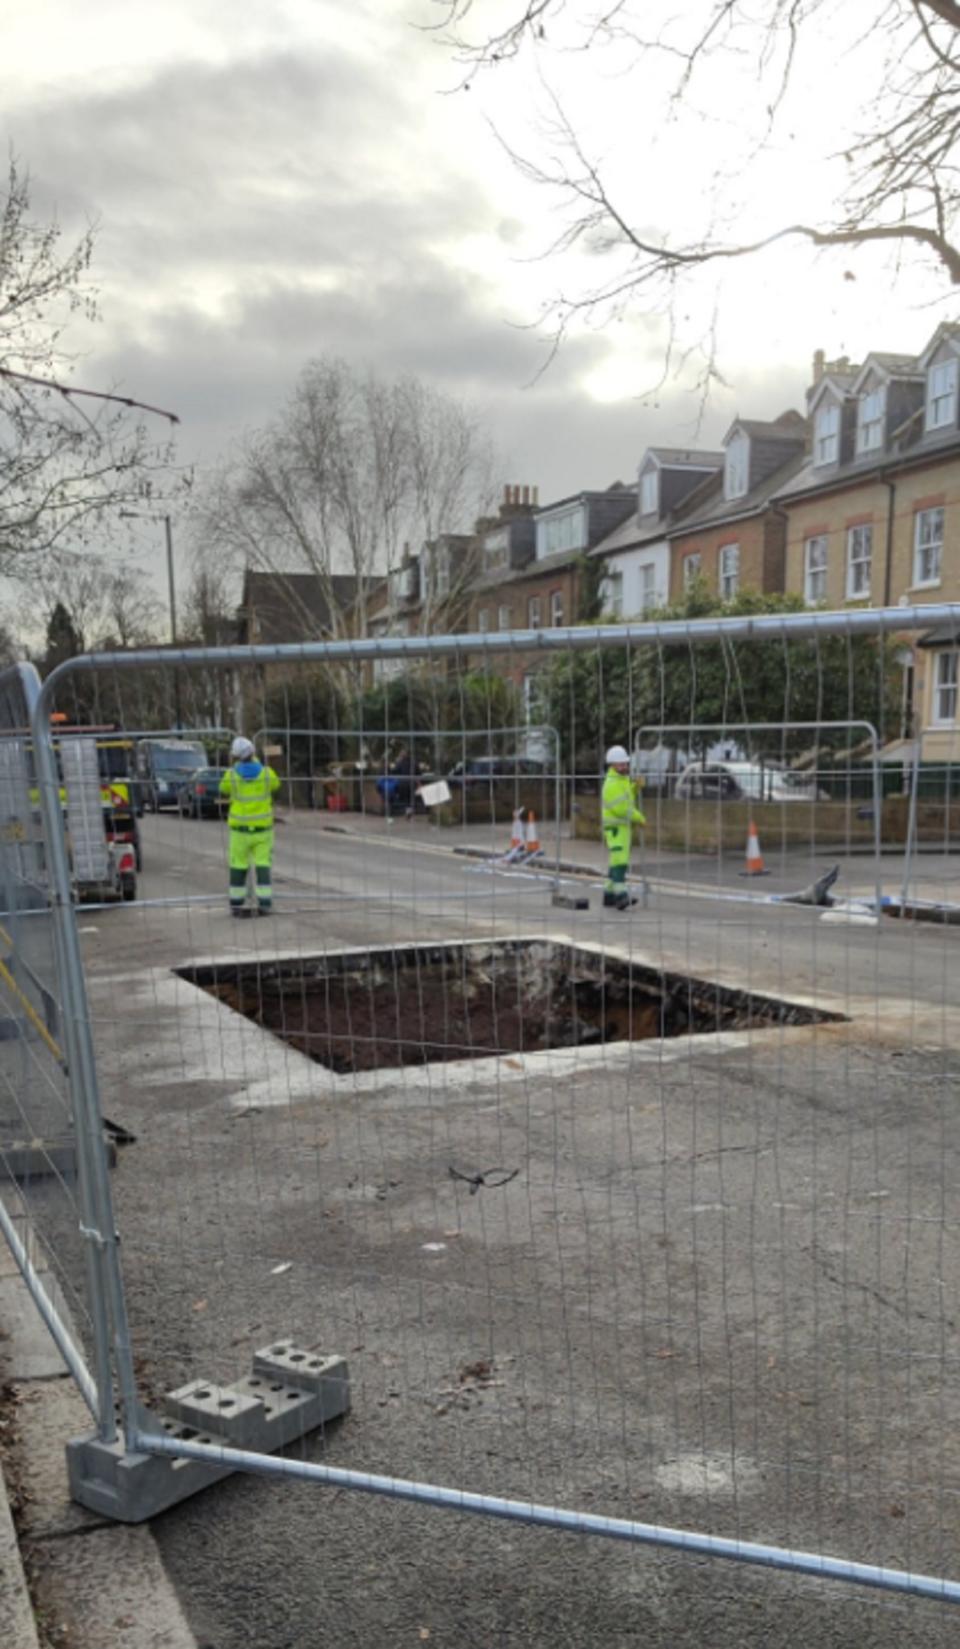 A sinkhole has closed a road in Teddington